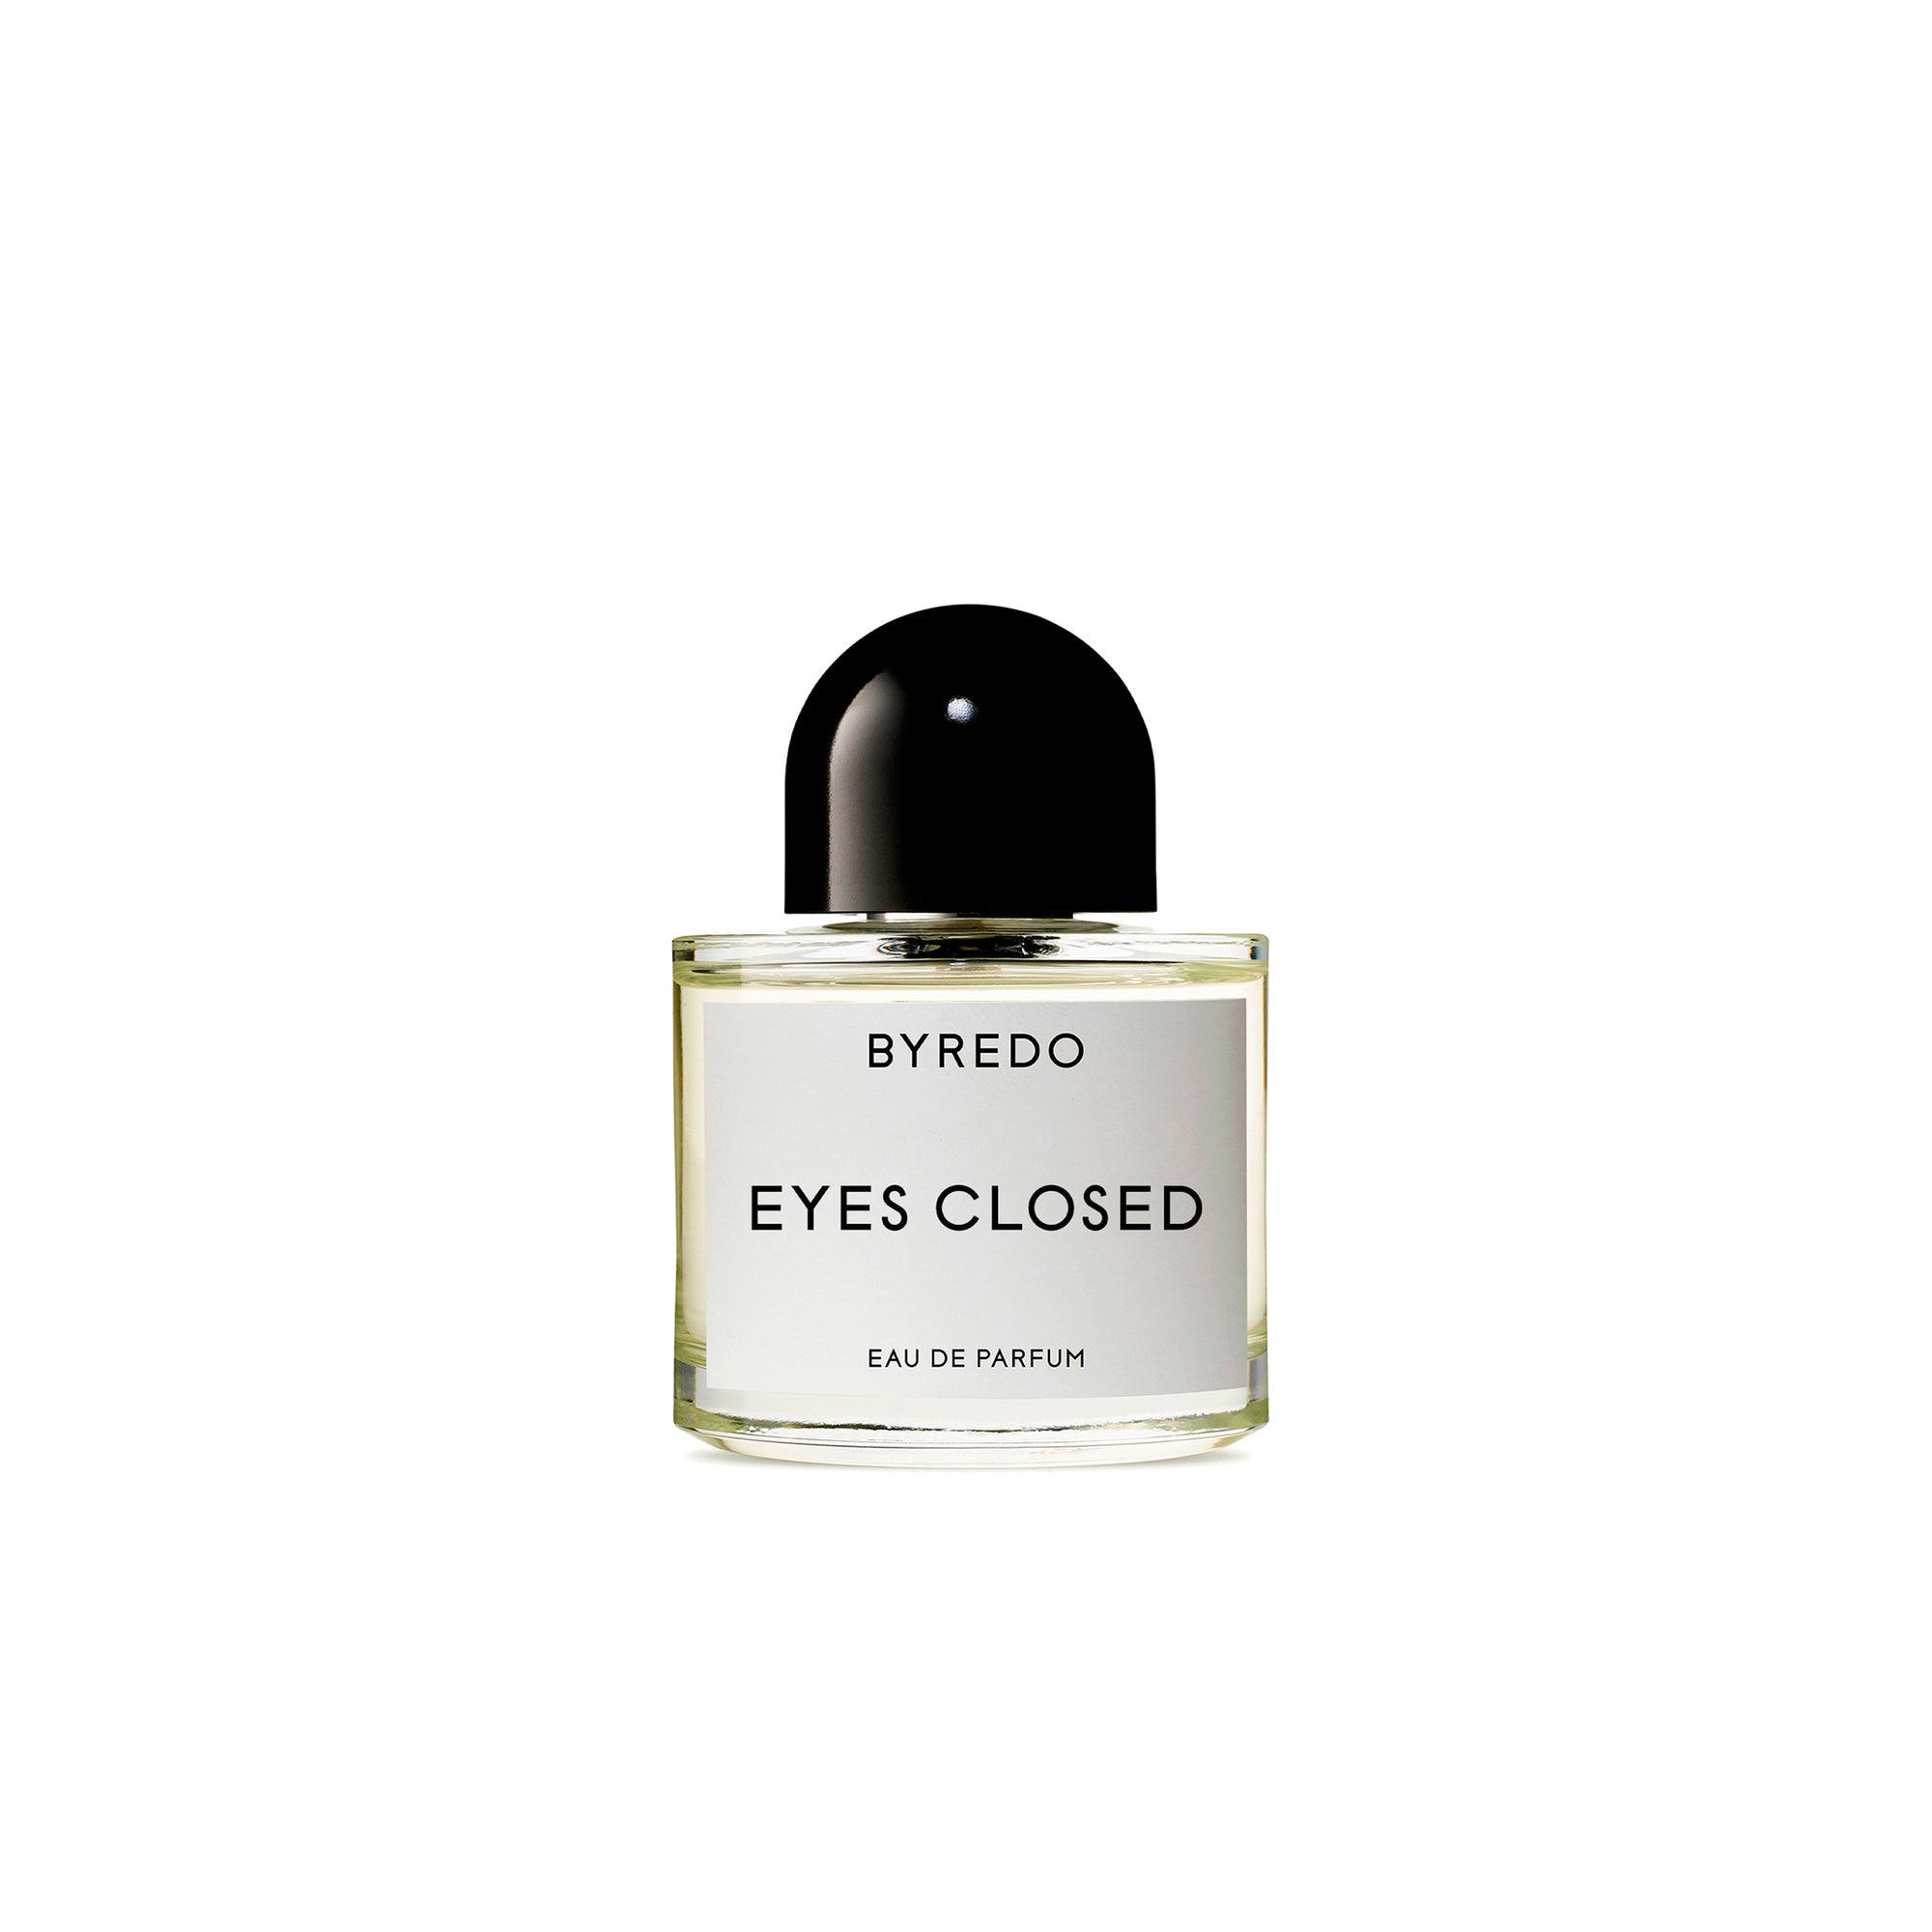 BYREDO - Eau de Parfum Eyes Closed - (50Ml) view 1